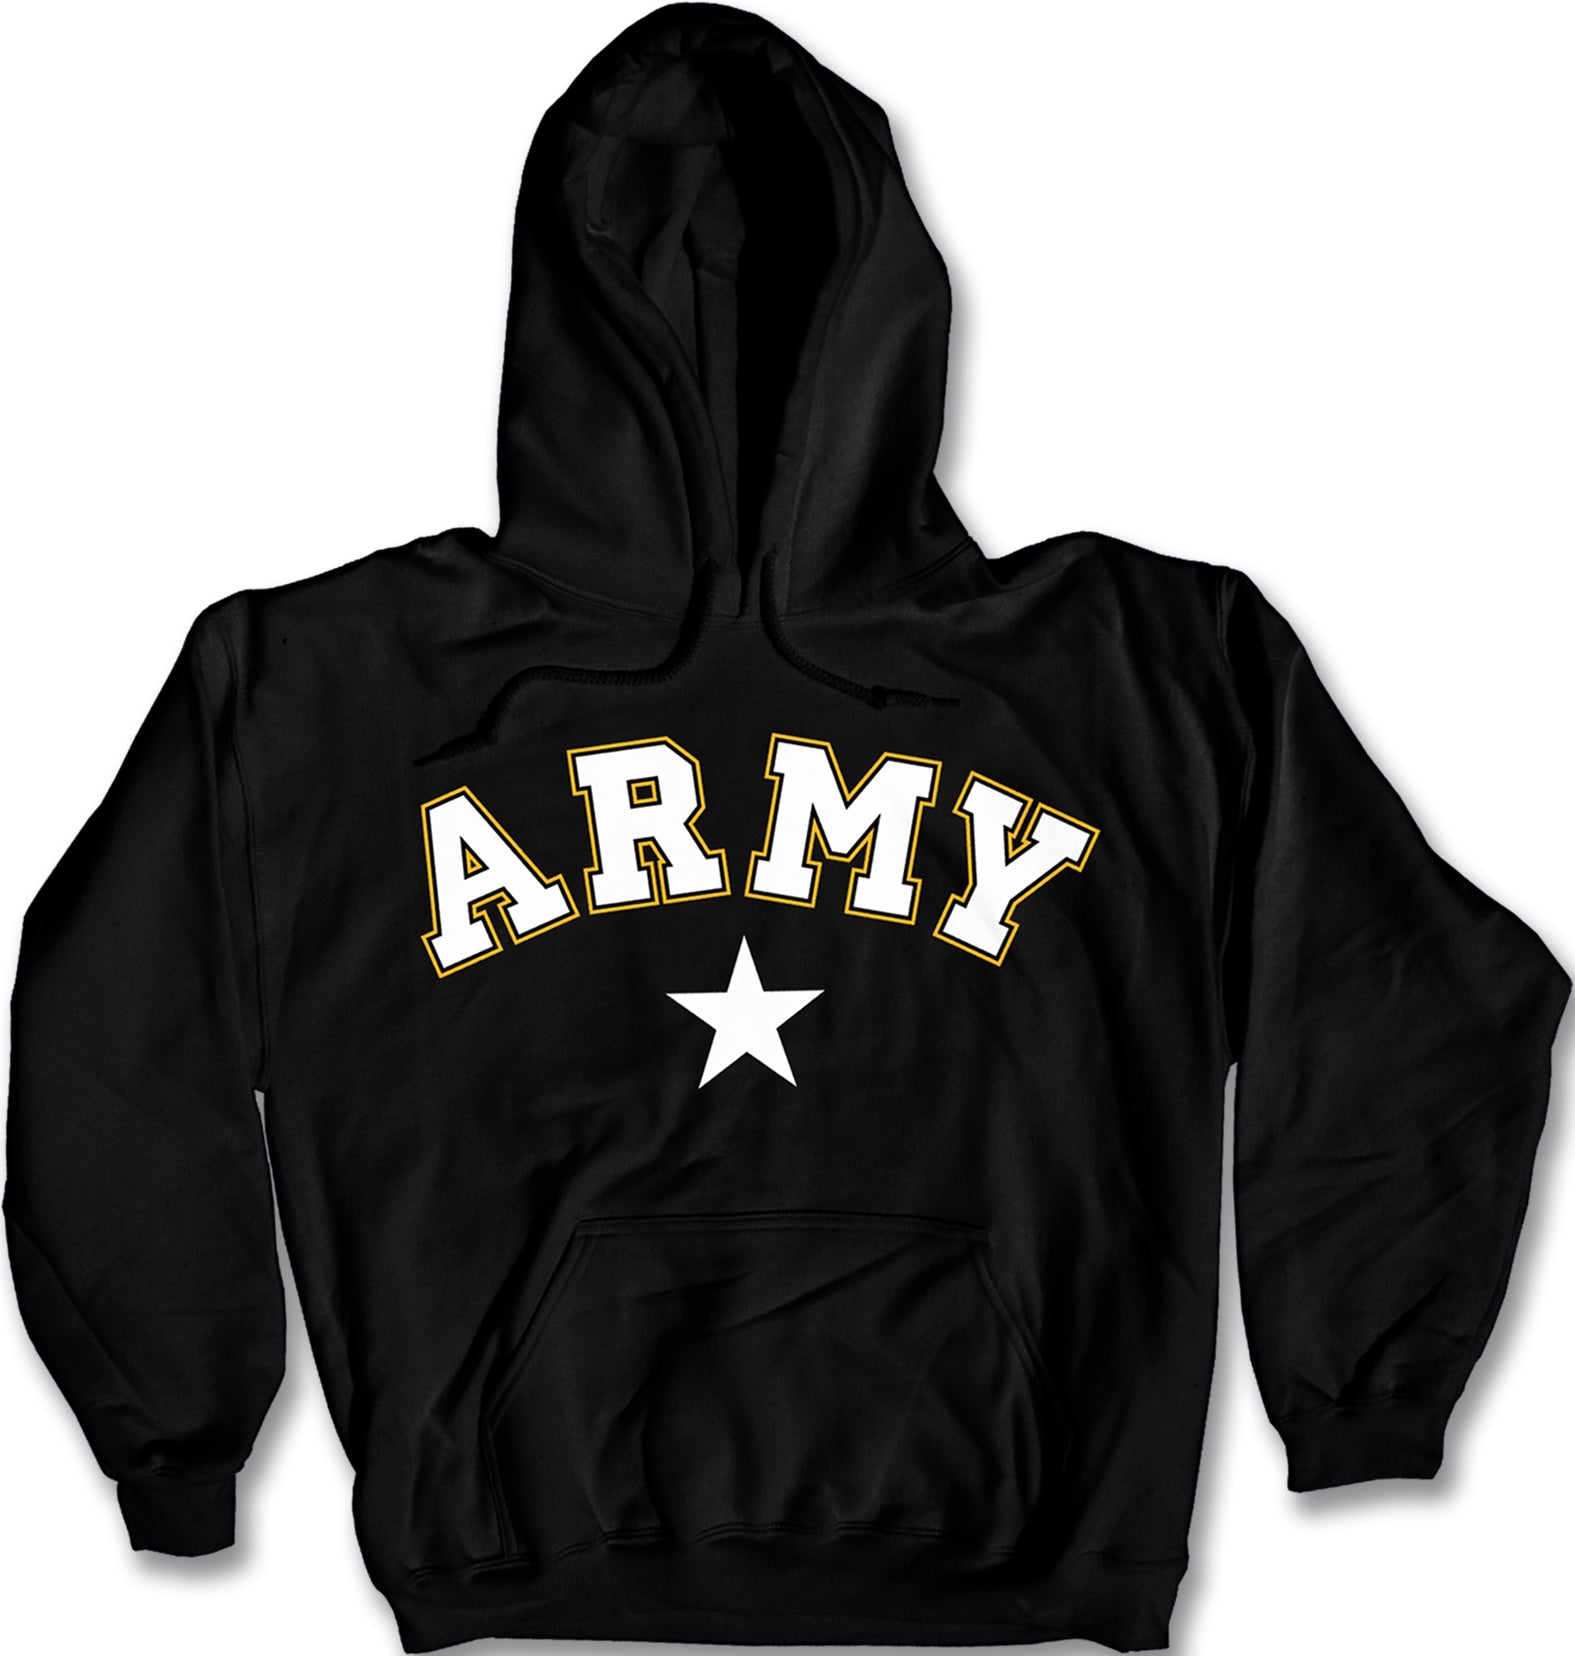 CLEARANCE - Army Star Hooded Sweatshirt